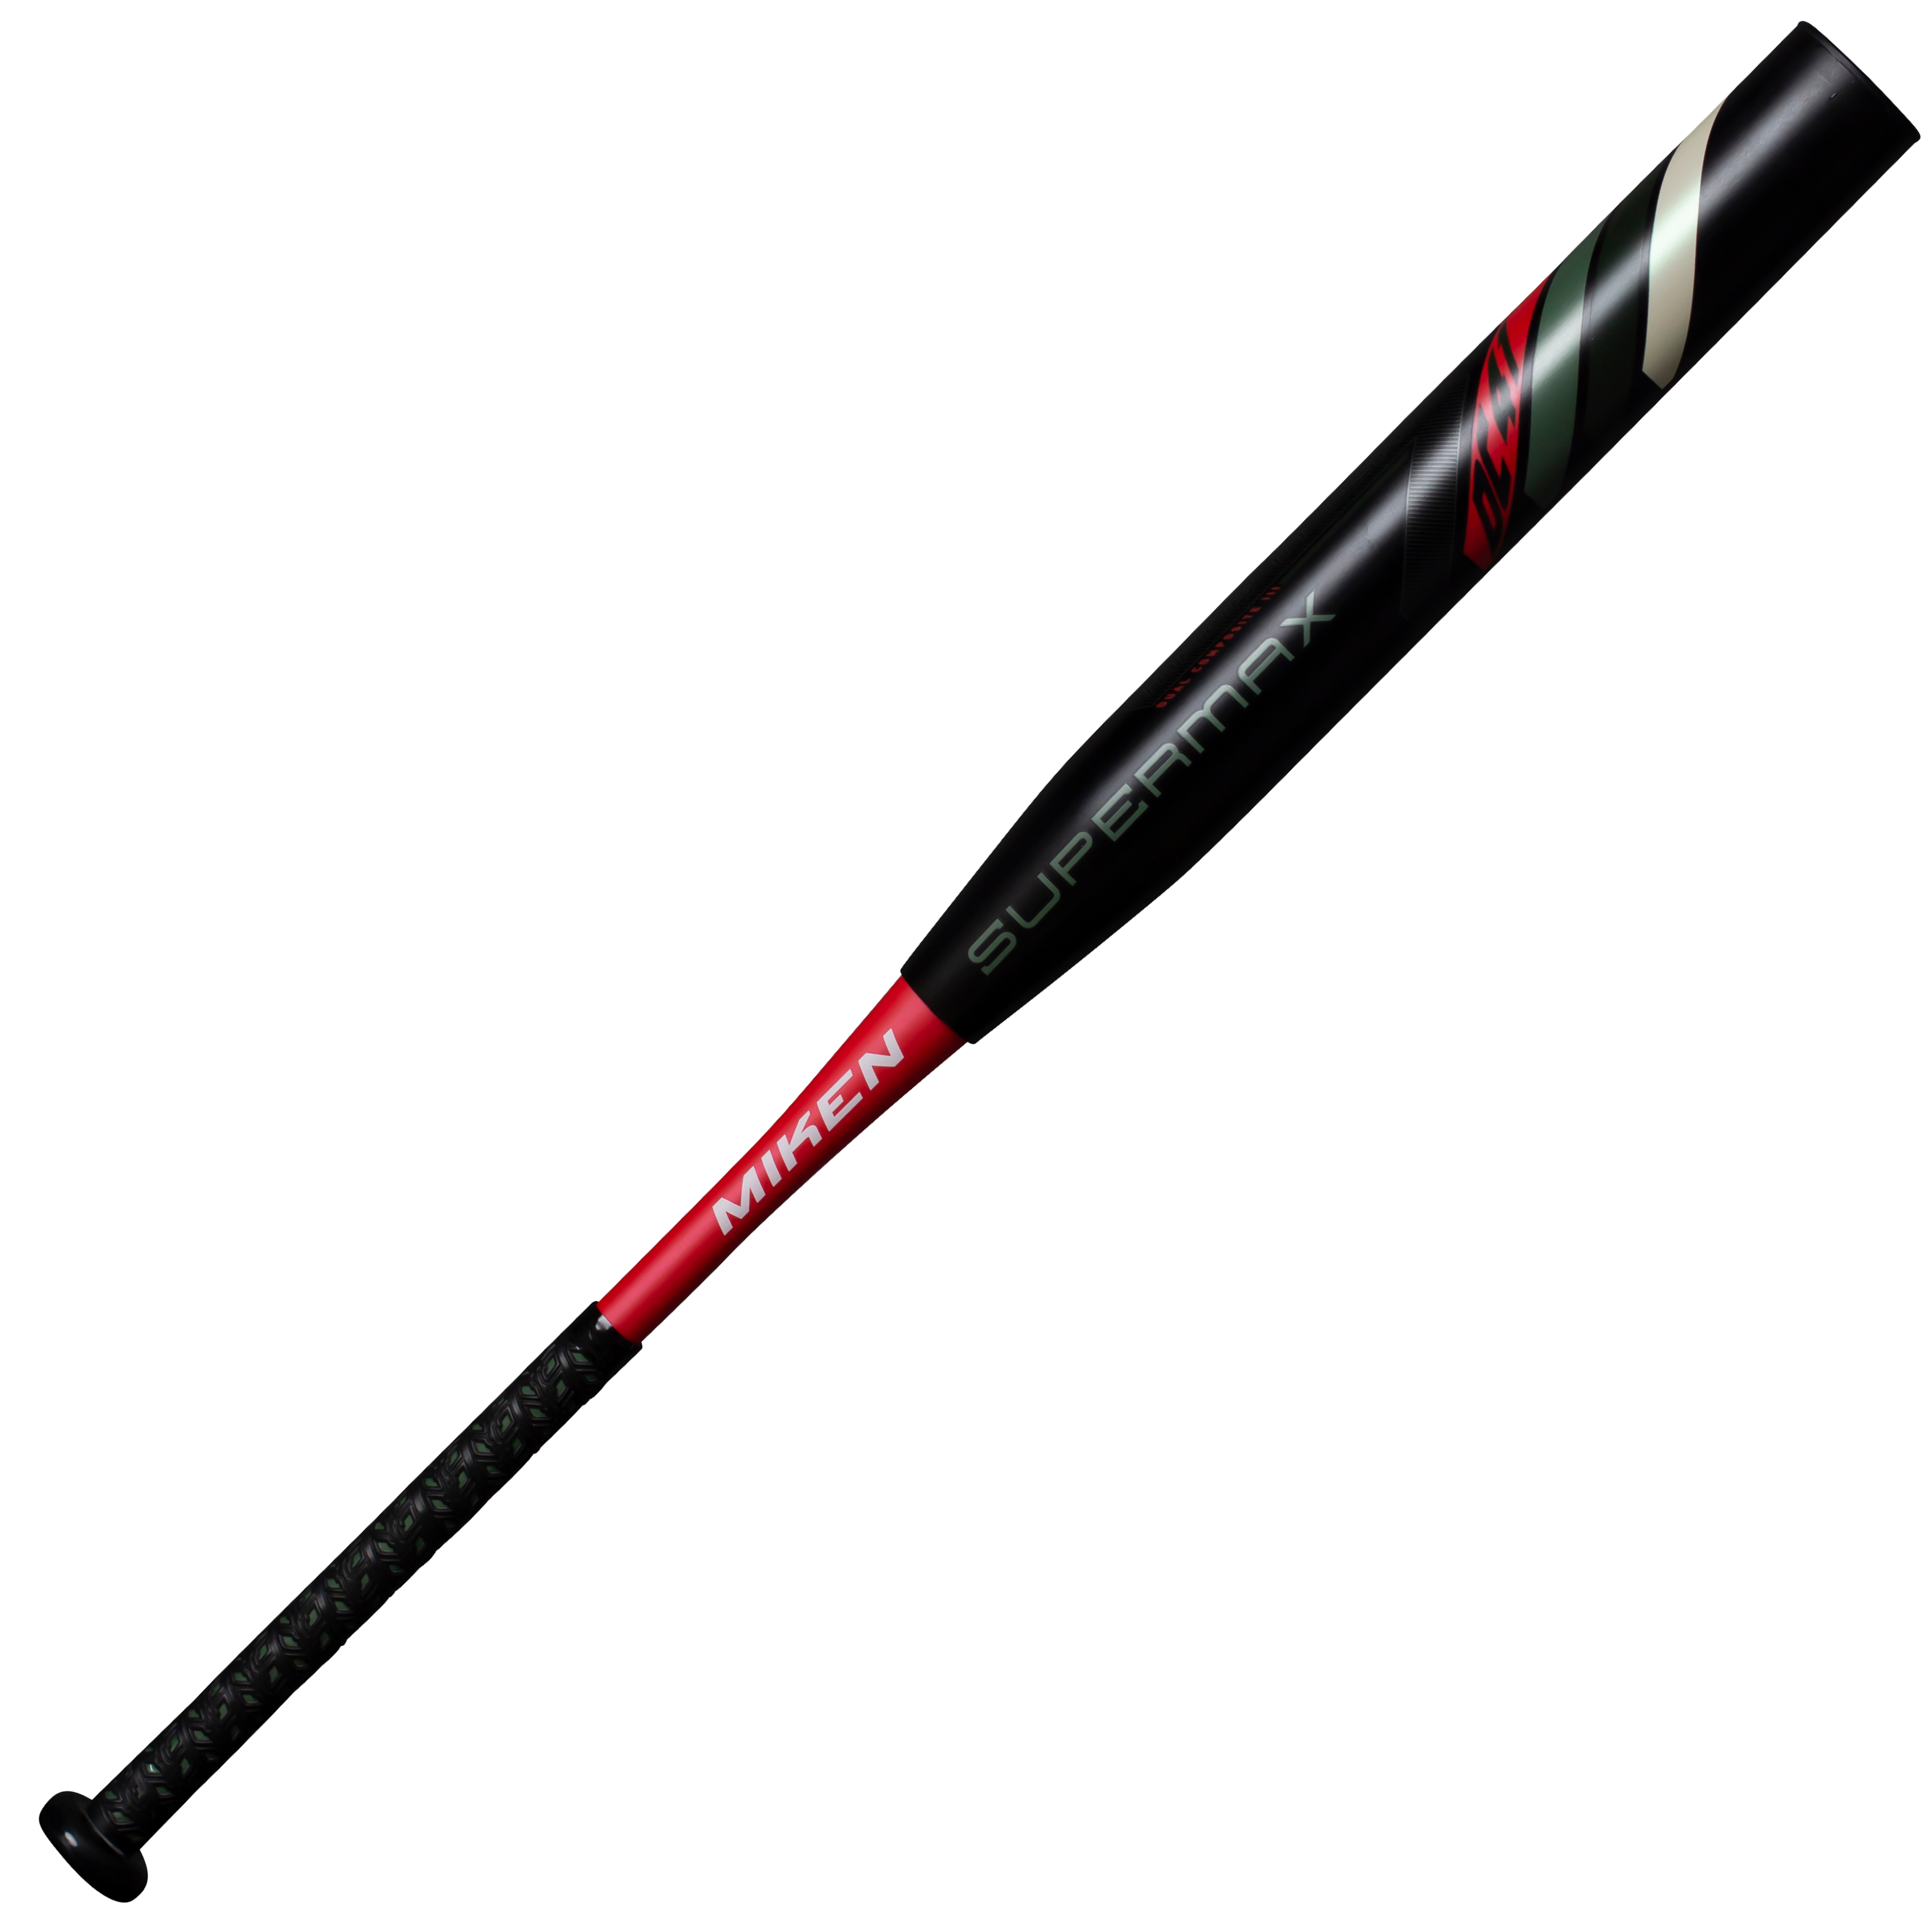 miken-dc-41-14-inch-supermax-usssa-slow-pitch-softball-bat-34-inch-27-oz-black MDC20U-BLK-27 Miken            